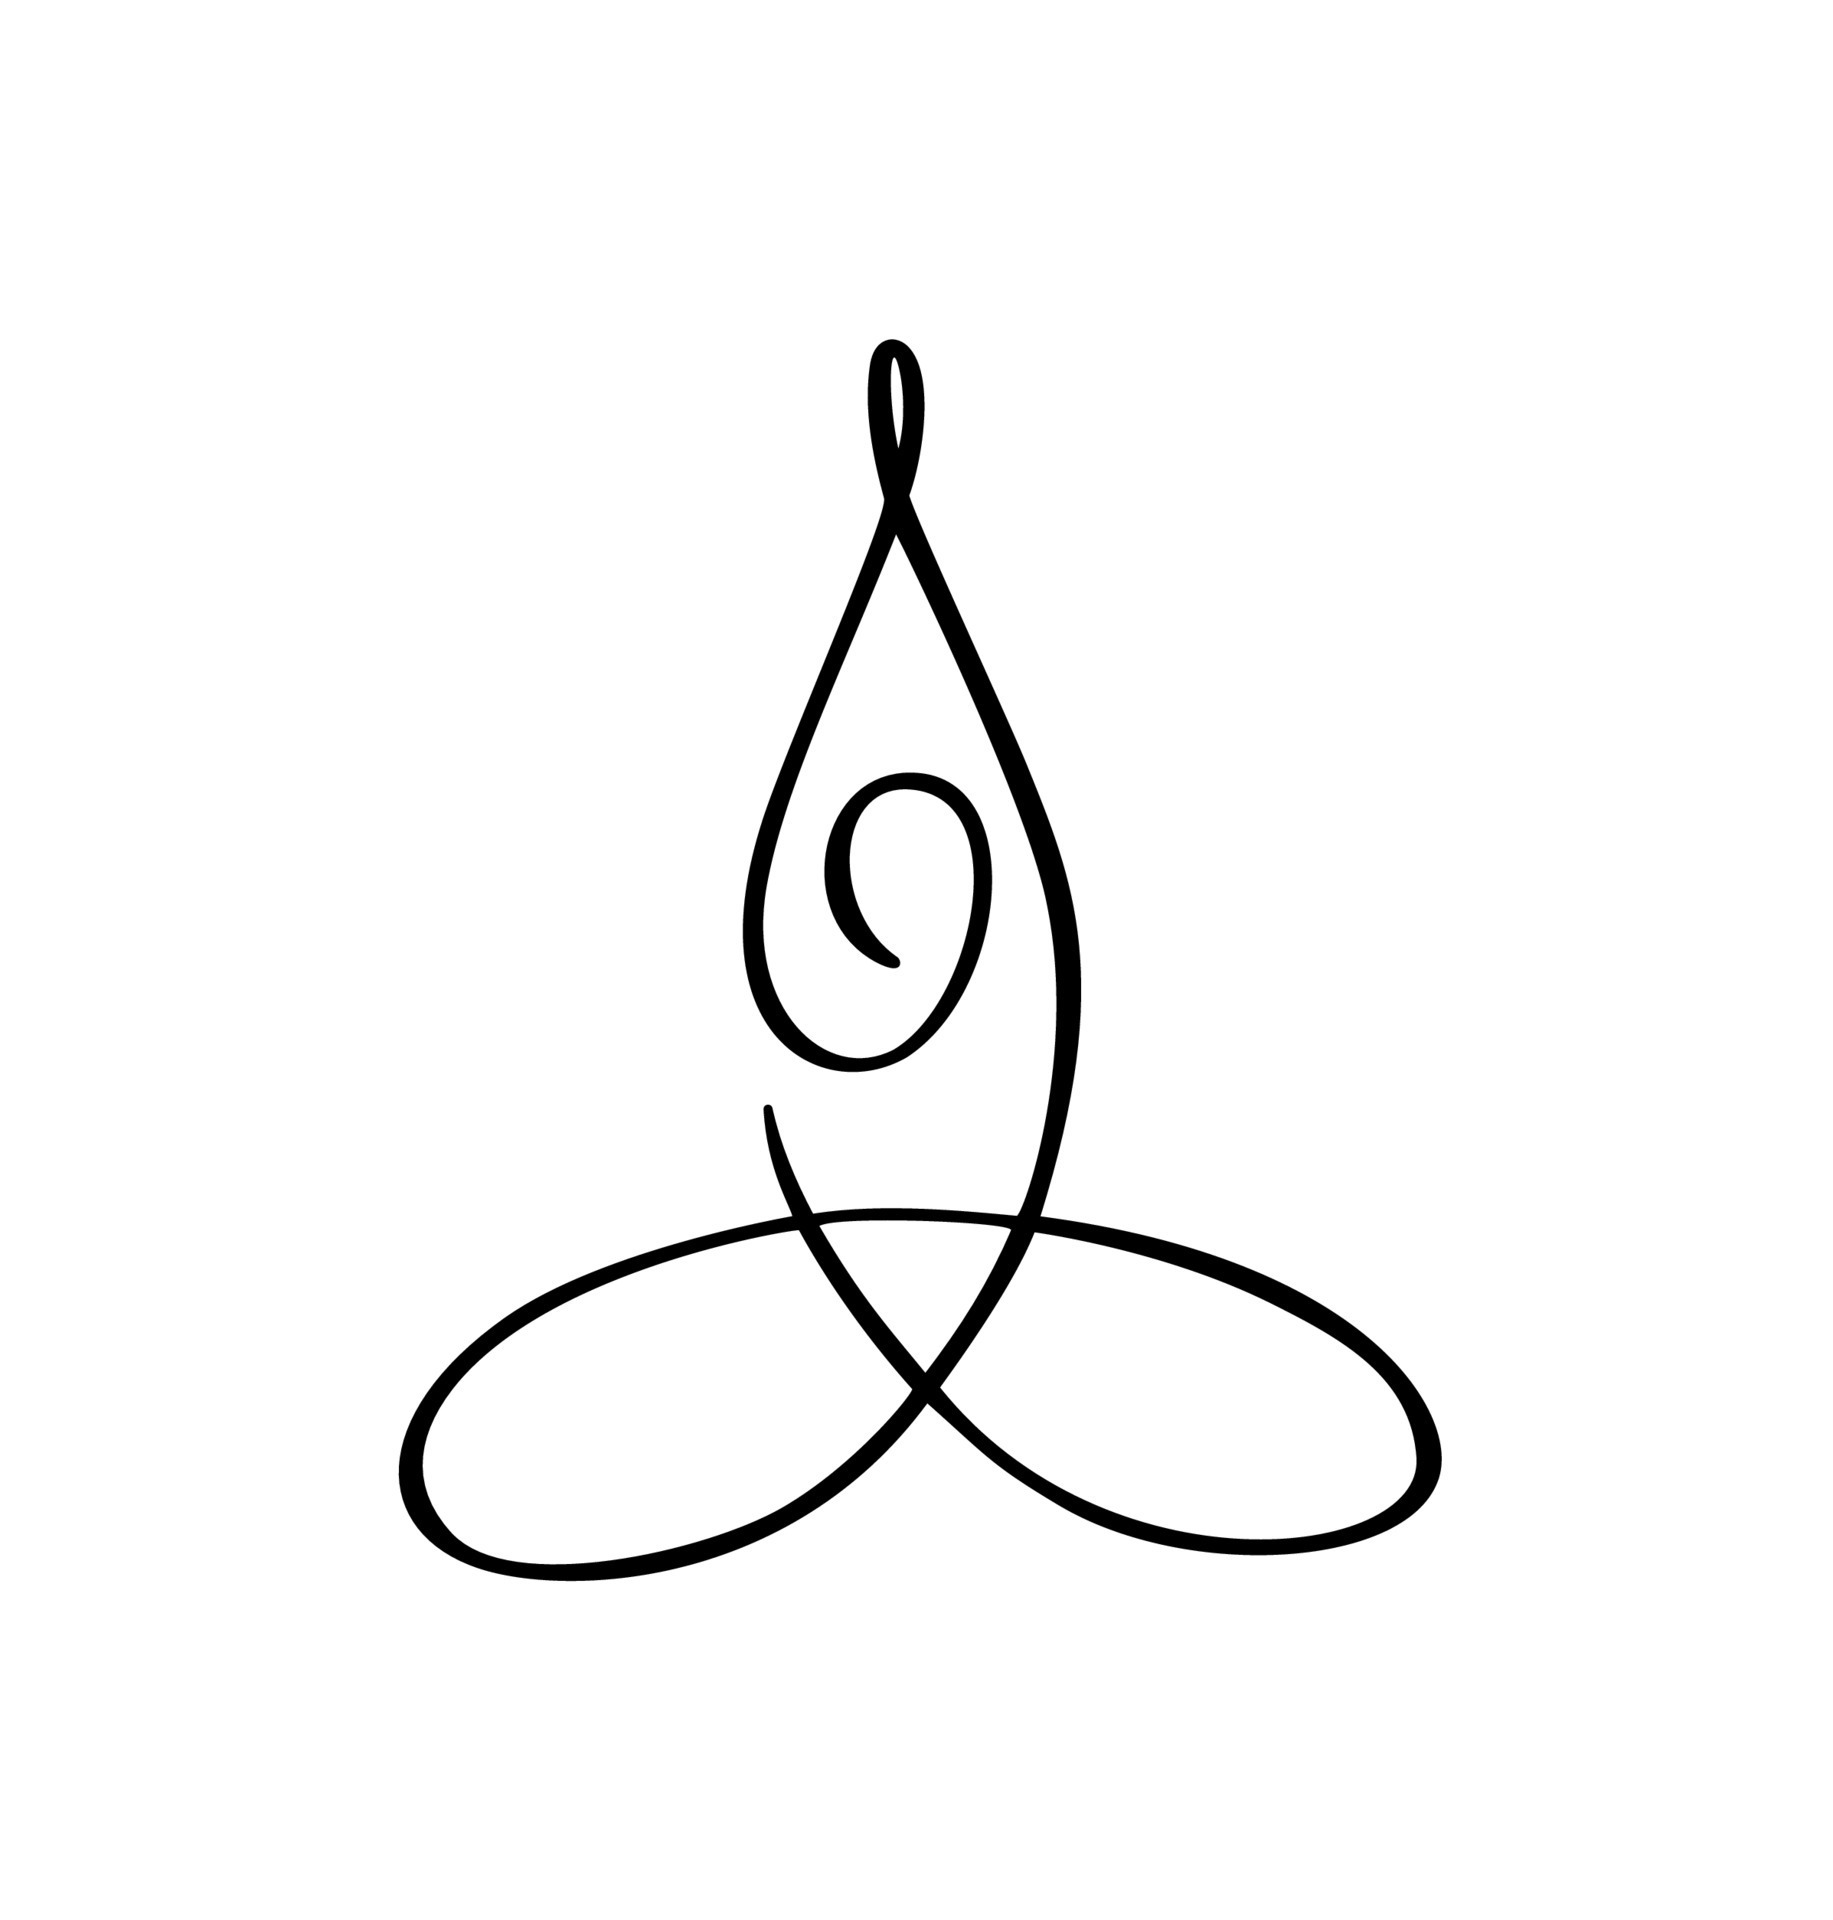 https://static.vecteezy.com/system/resources/previews/008/652/513/original/yoga-lotus-pose-icon-logo-concept-meditation-yoga-minimal-symbol-health-spa-meditation-harmony-zen-logotype-creative-graphic-sign-design-template-vector.jpg